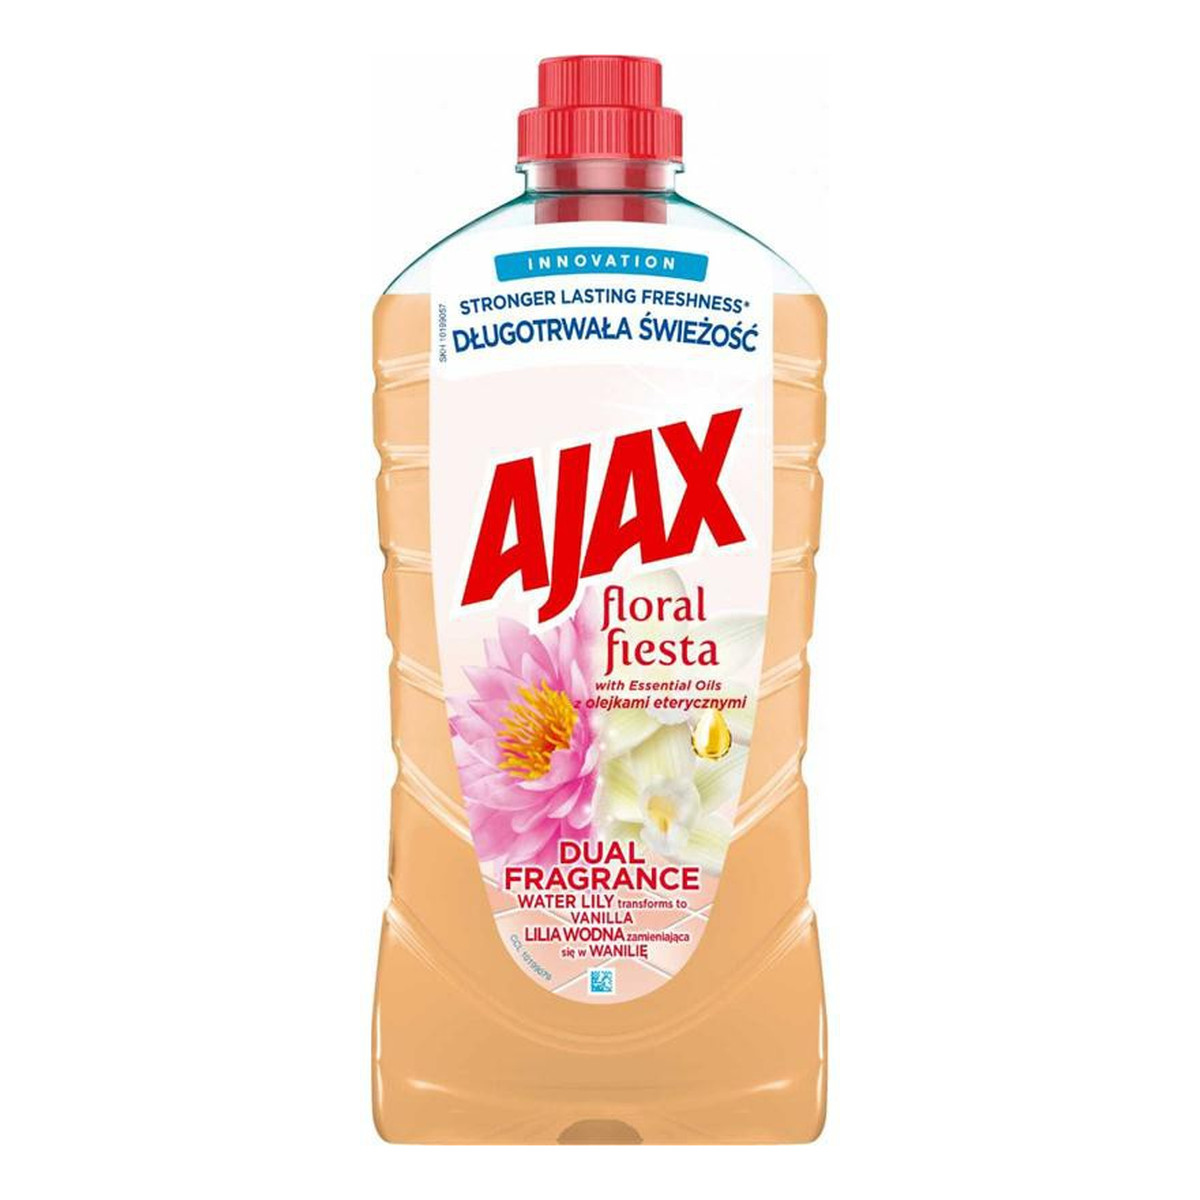 Ajax Floral Fietsa Płyn Uniwersalny Lilia + Wanilia 1000ml